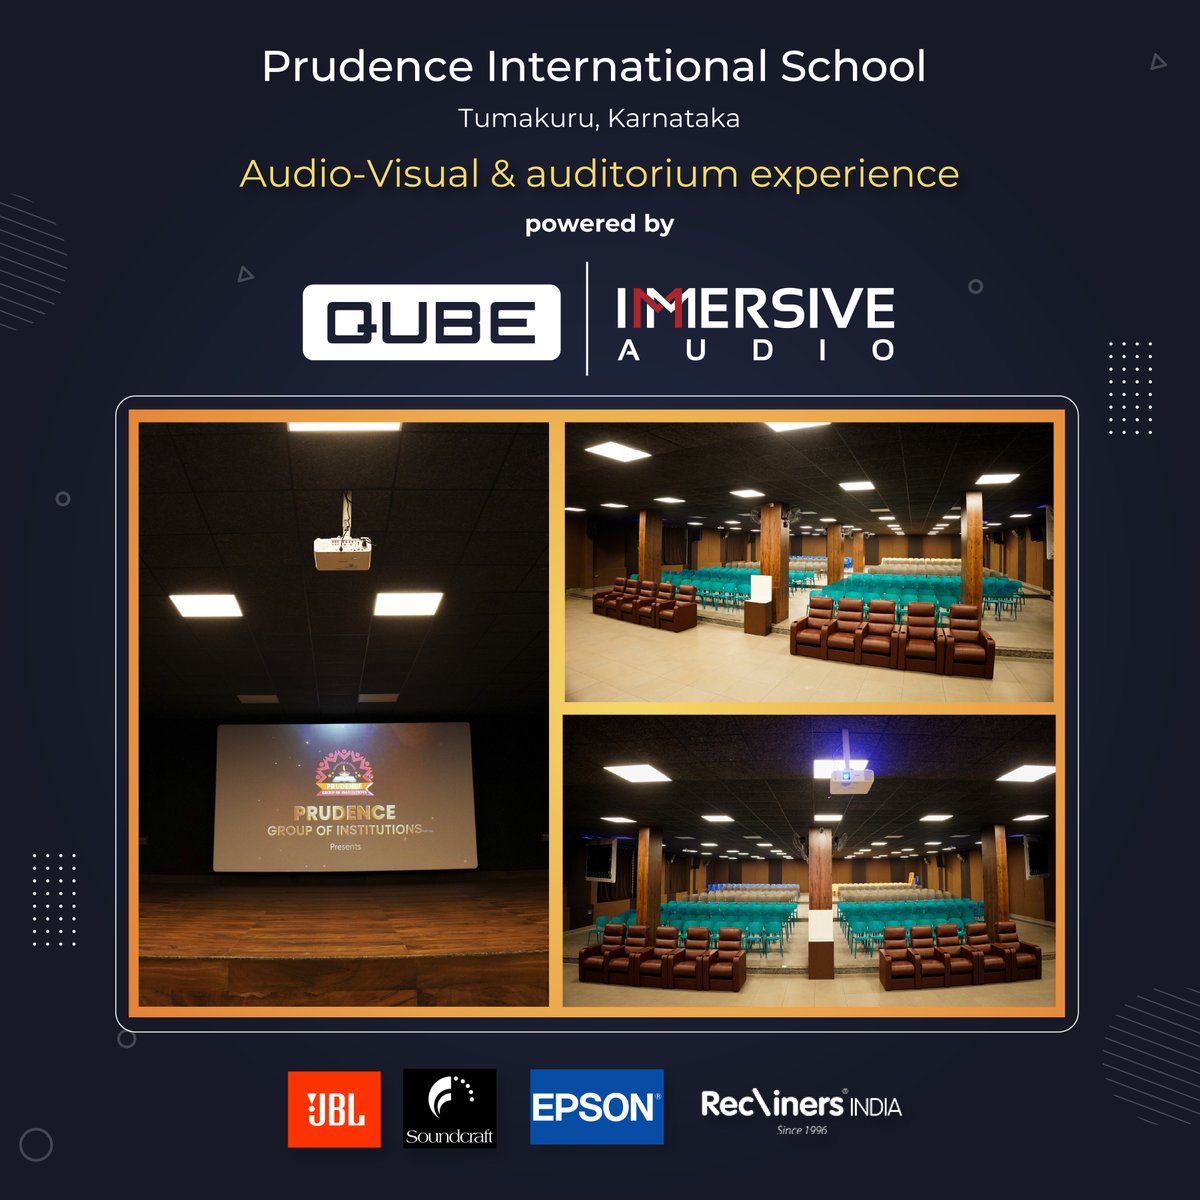 AV integration and auditorium experience at Prudence International School, Karnataka was undertaken by @qubecinema #ImmersiveAudio

#audiovisual #techintegration